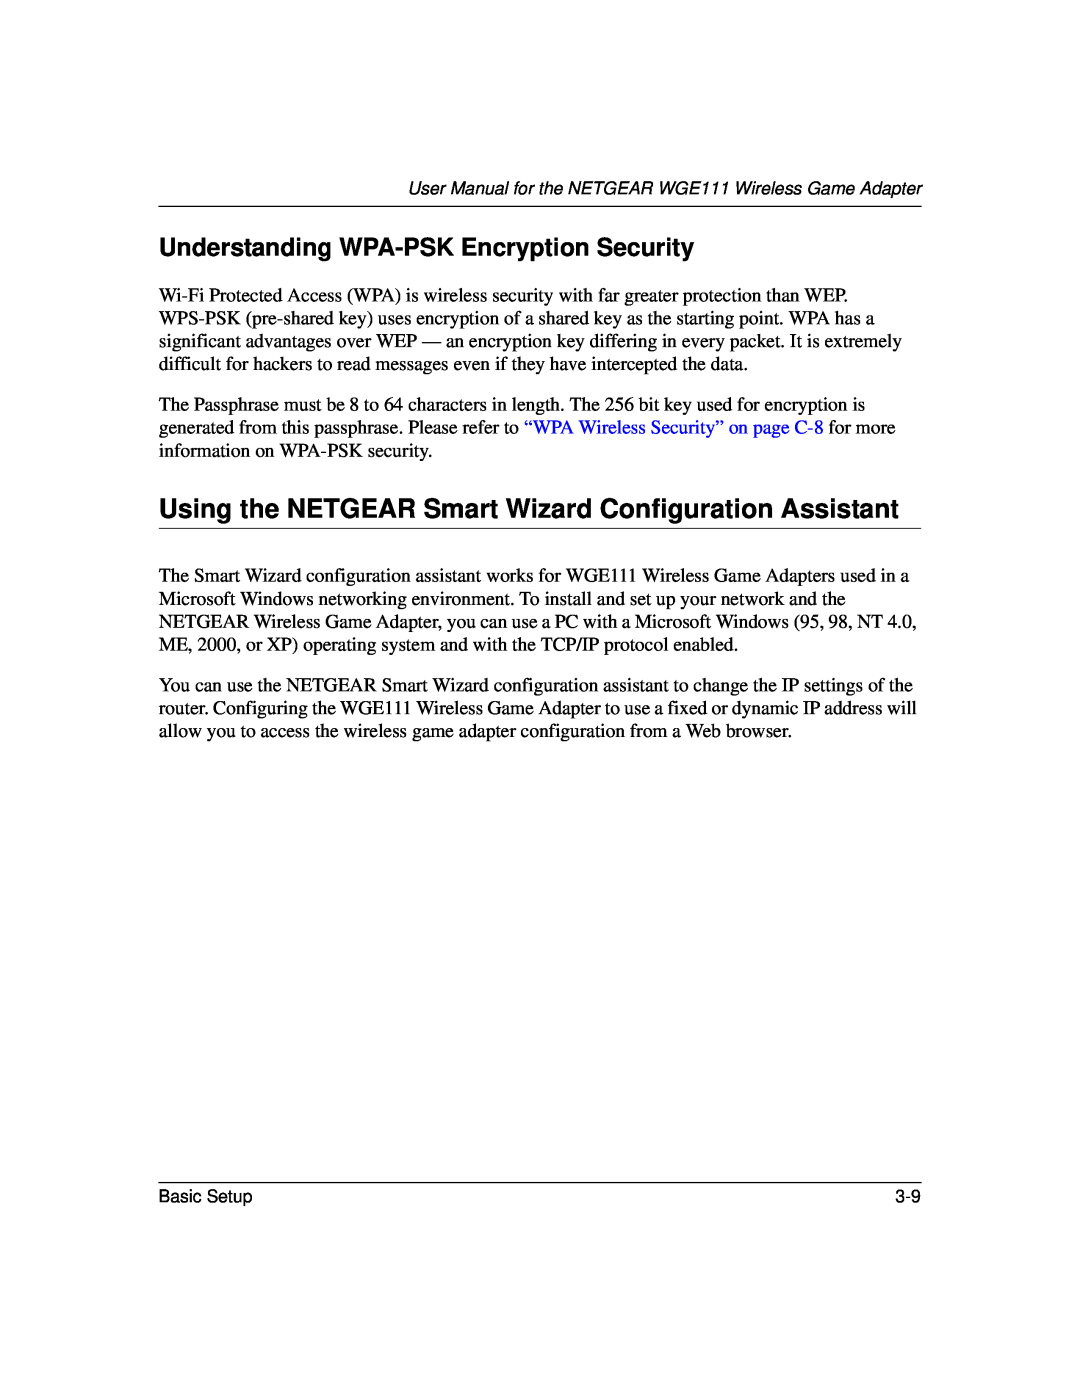 NETGEAR WGE111 Using the NETGEAR Smart Wizard Configuration Assistant, Understanding WPA-PSK Encryption Security 